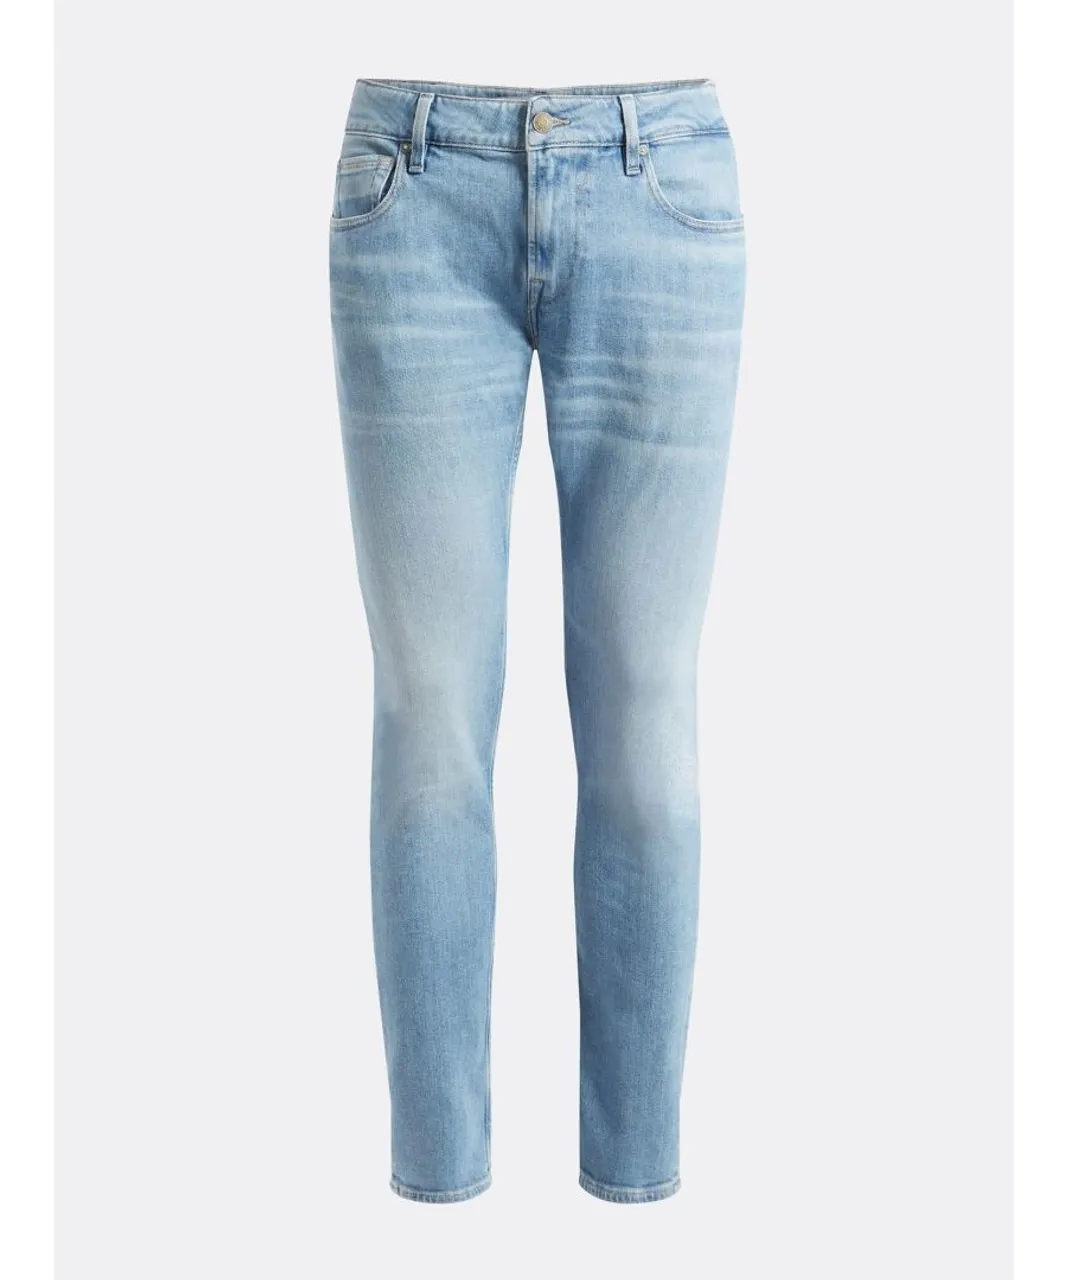 Guess Mens Miami Skinny Fit Denim Jeans Pant - Light Blue